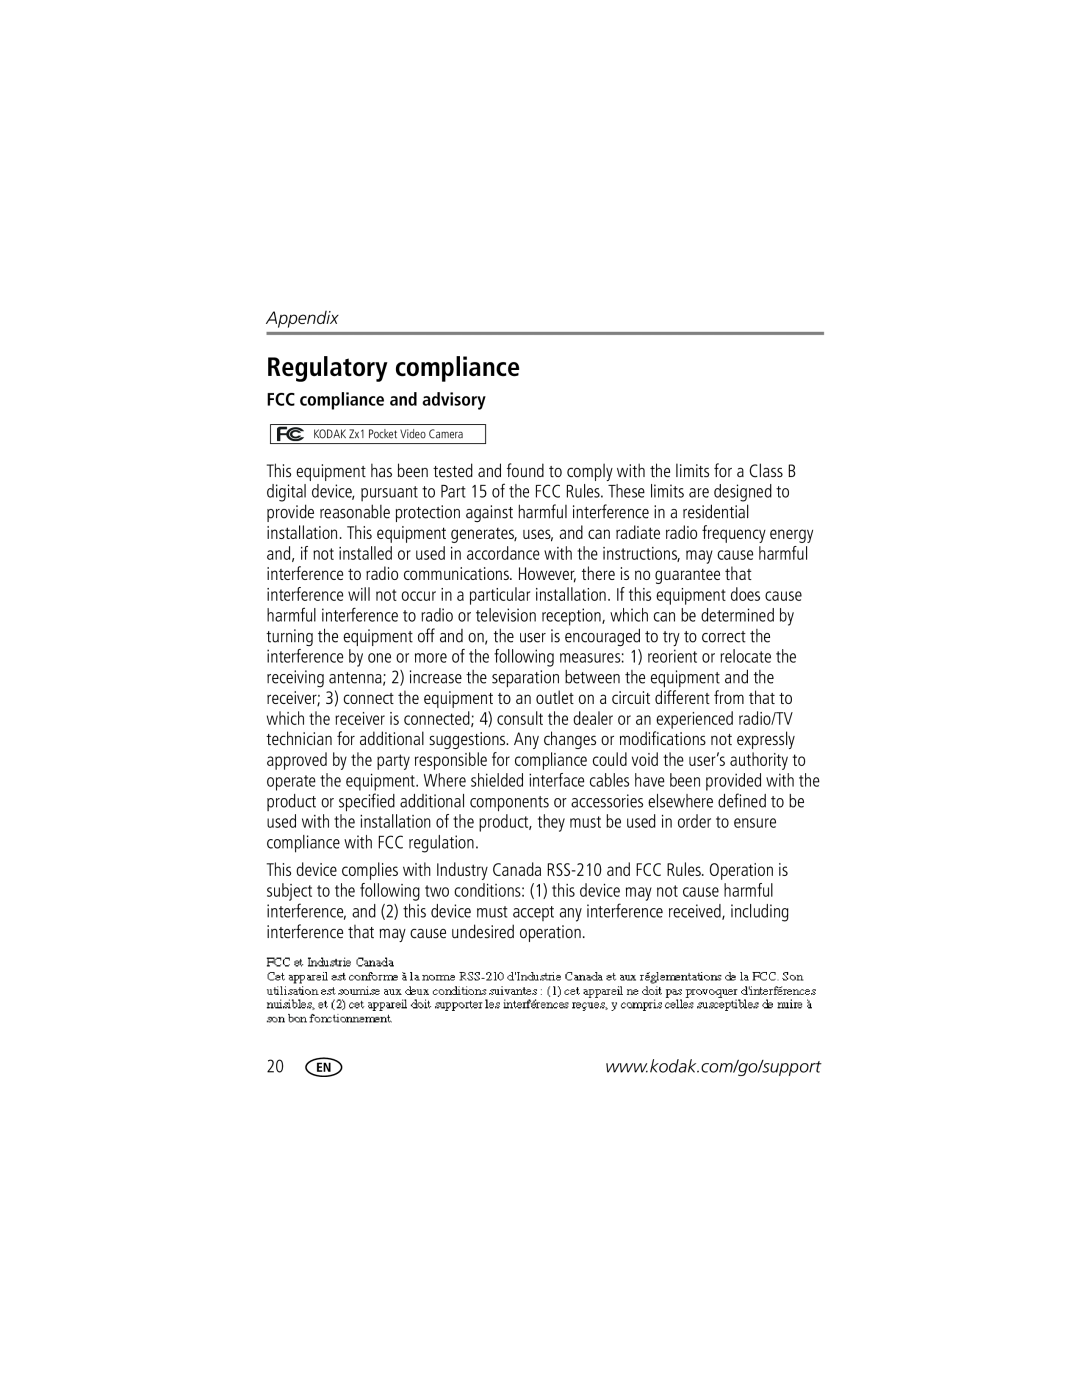 Kodak 1455013 manual Regulatory compliance, FCC compliance and advisory, Appendix 